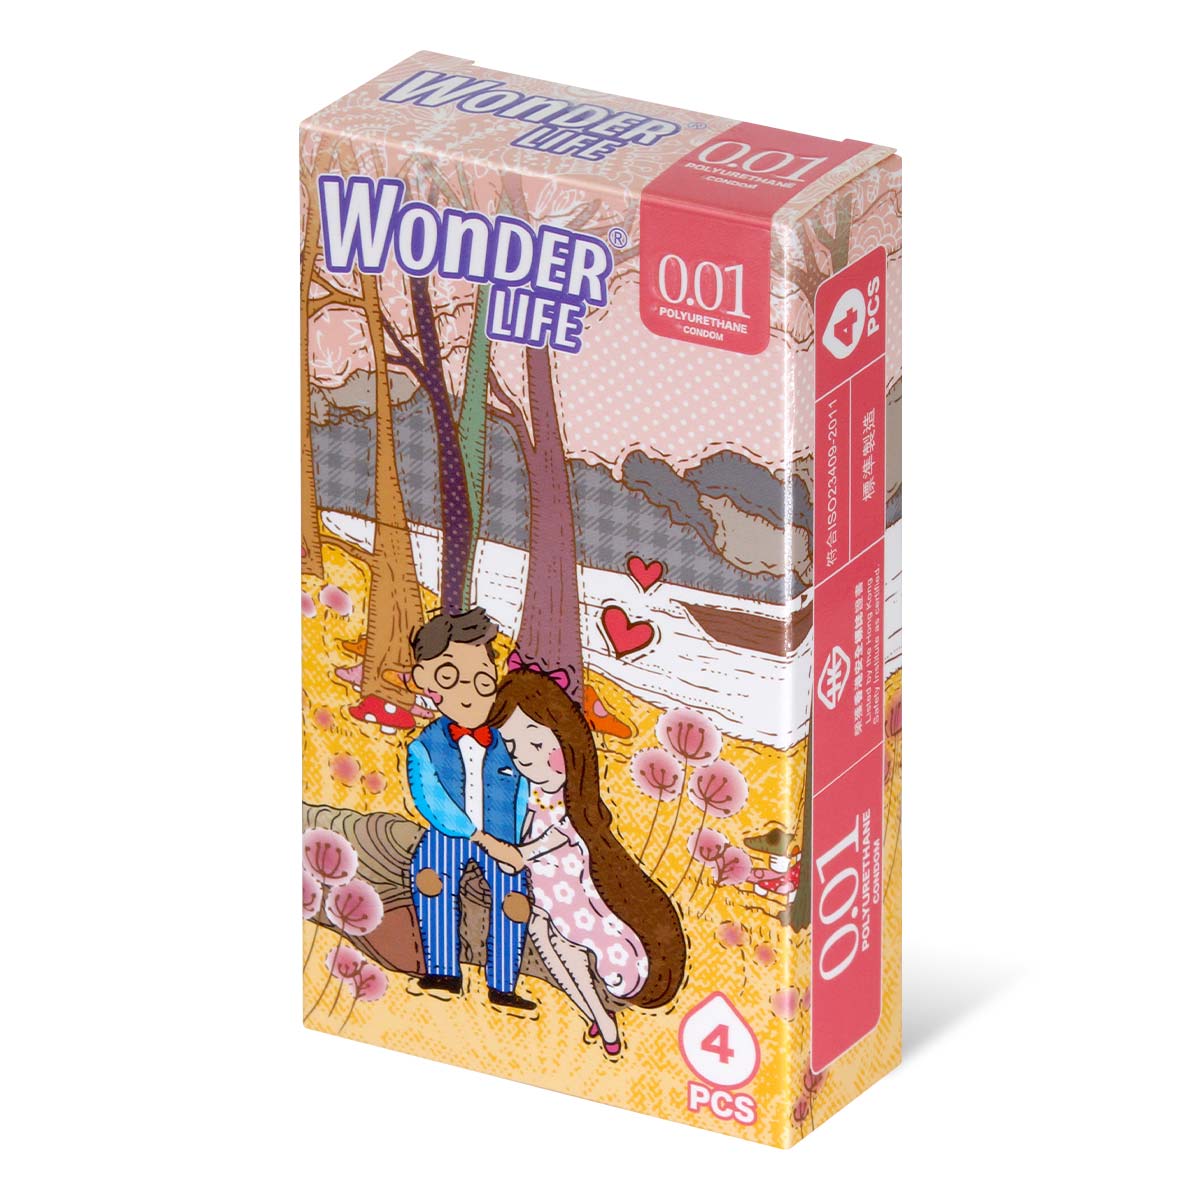 Wonder Life 0.01 ポリウレタン製コンドーム 4個入-p_1